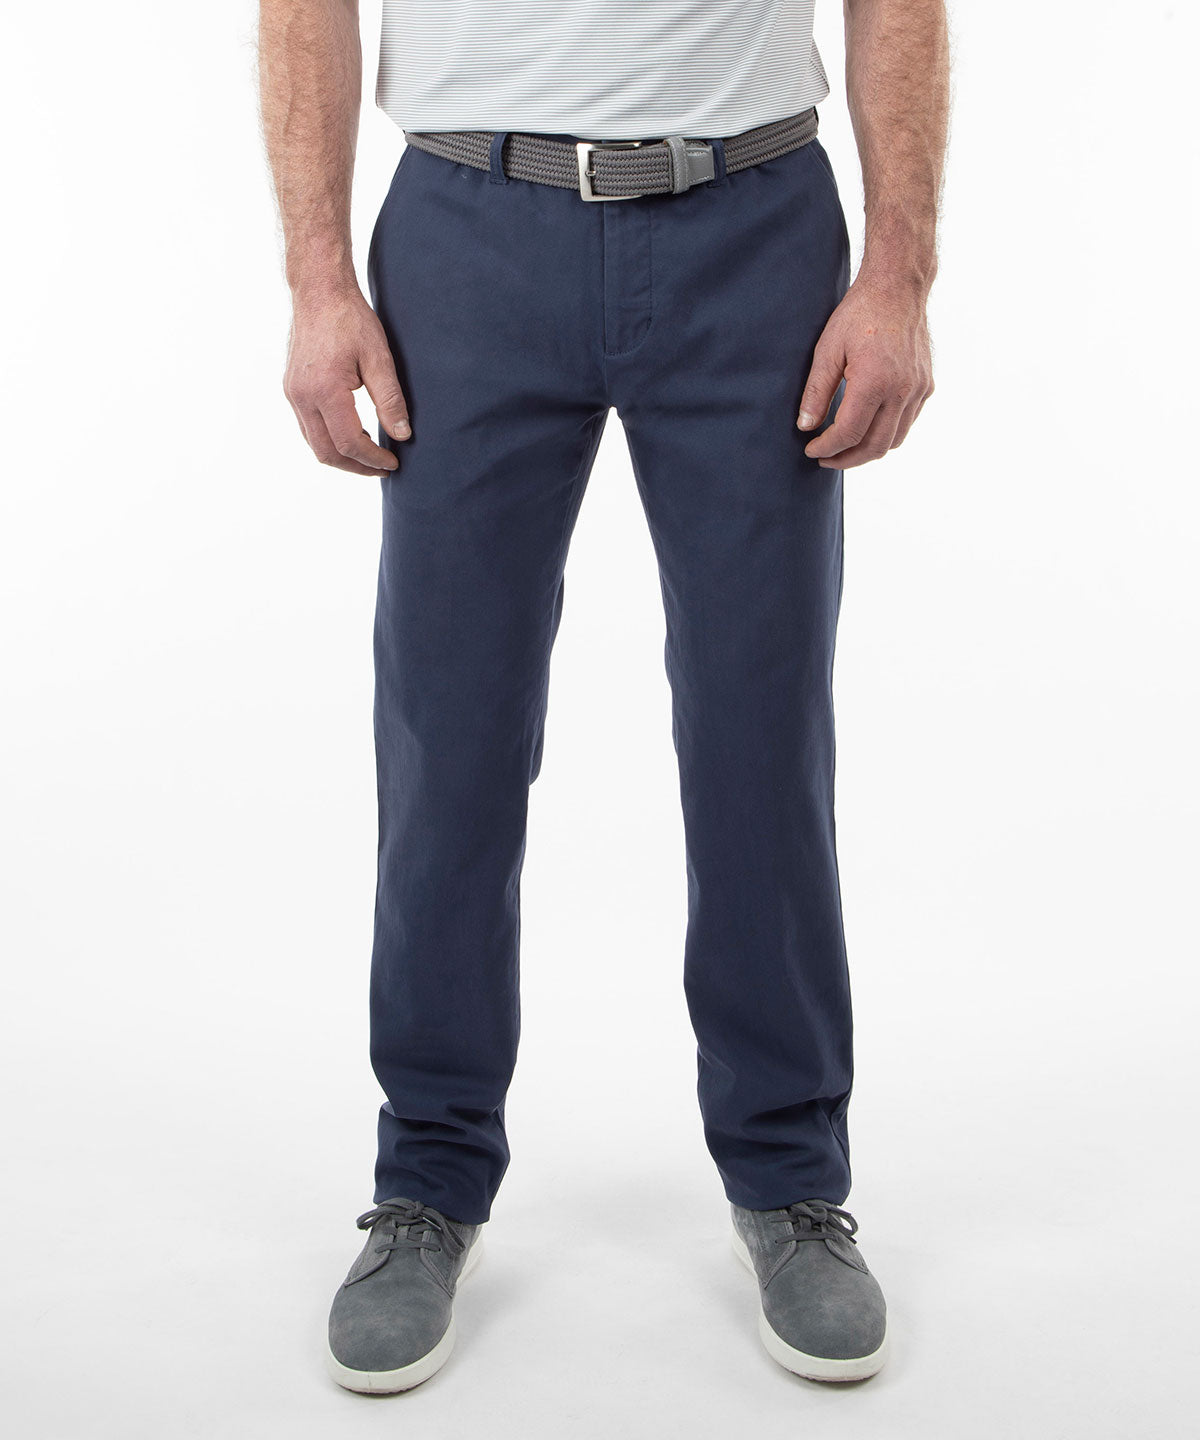 Custom Stretch Pants For Men | FlexTech Pants